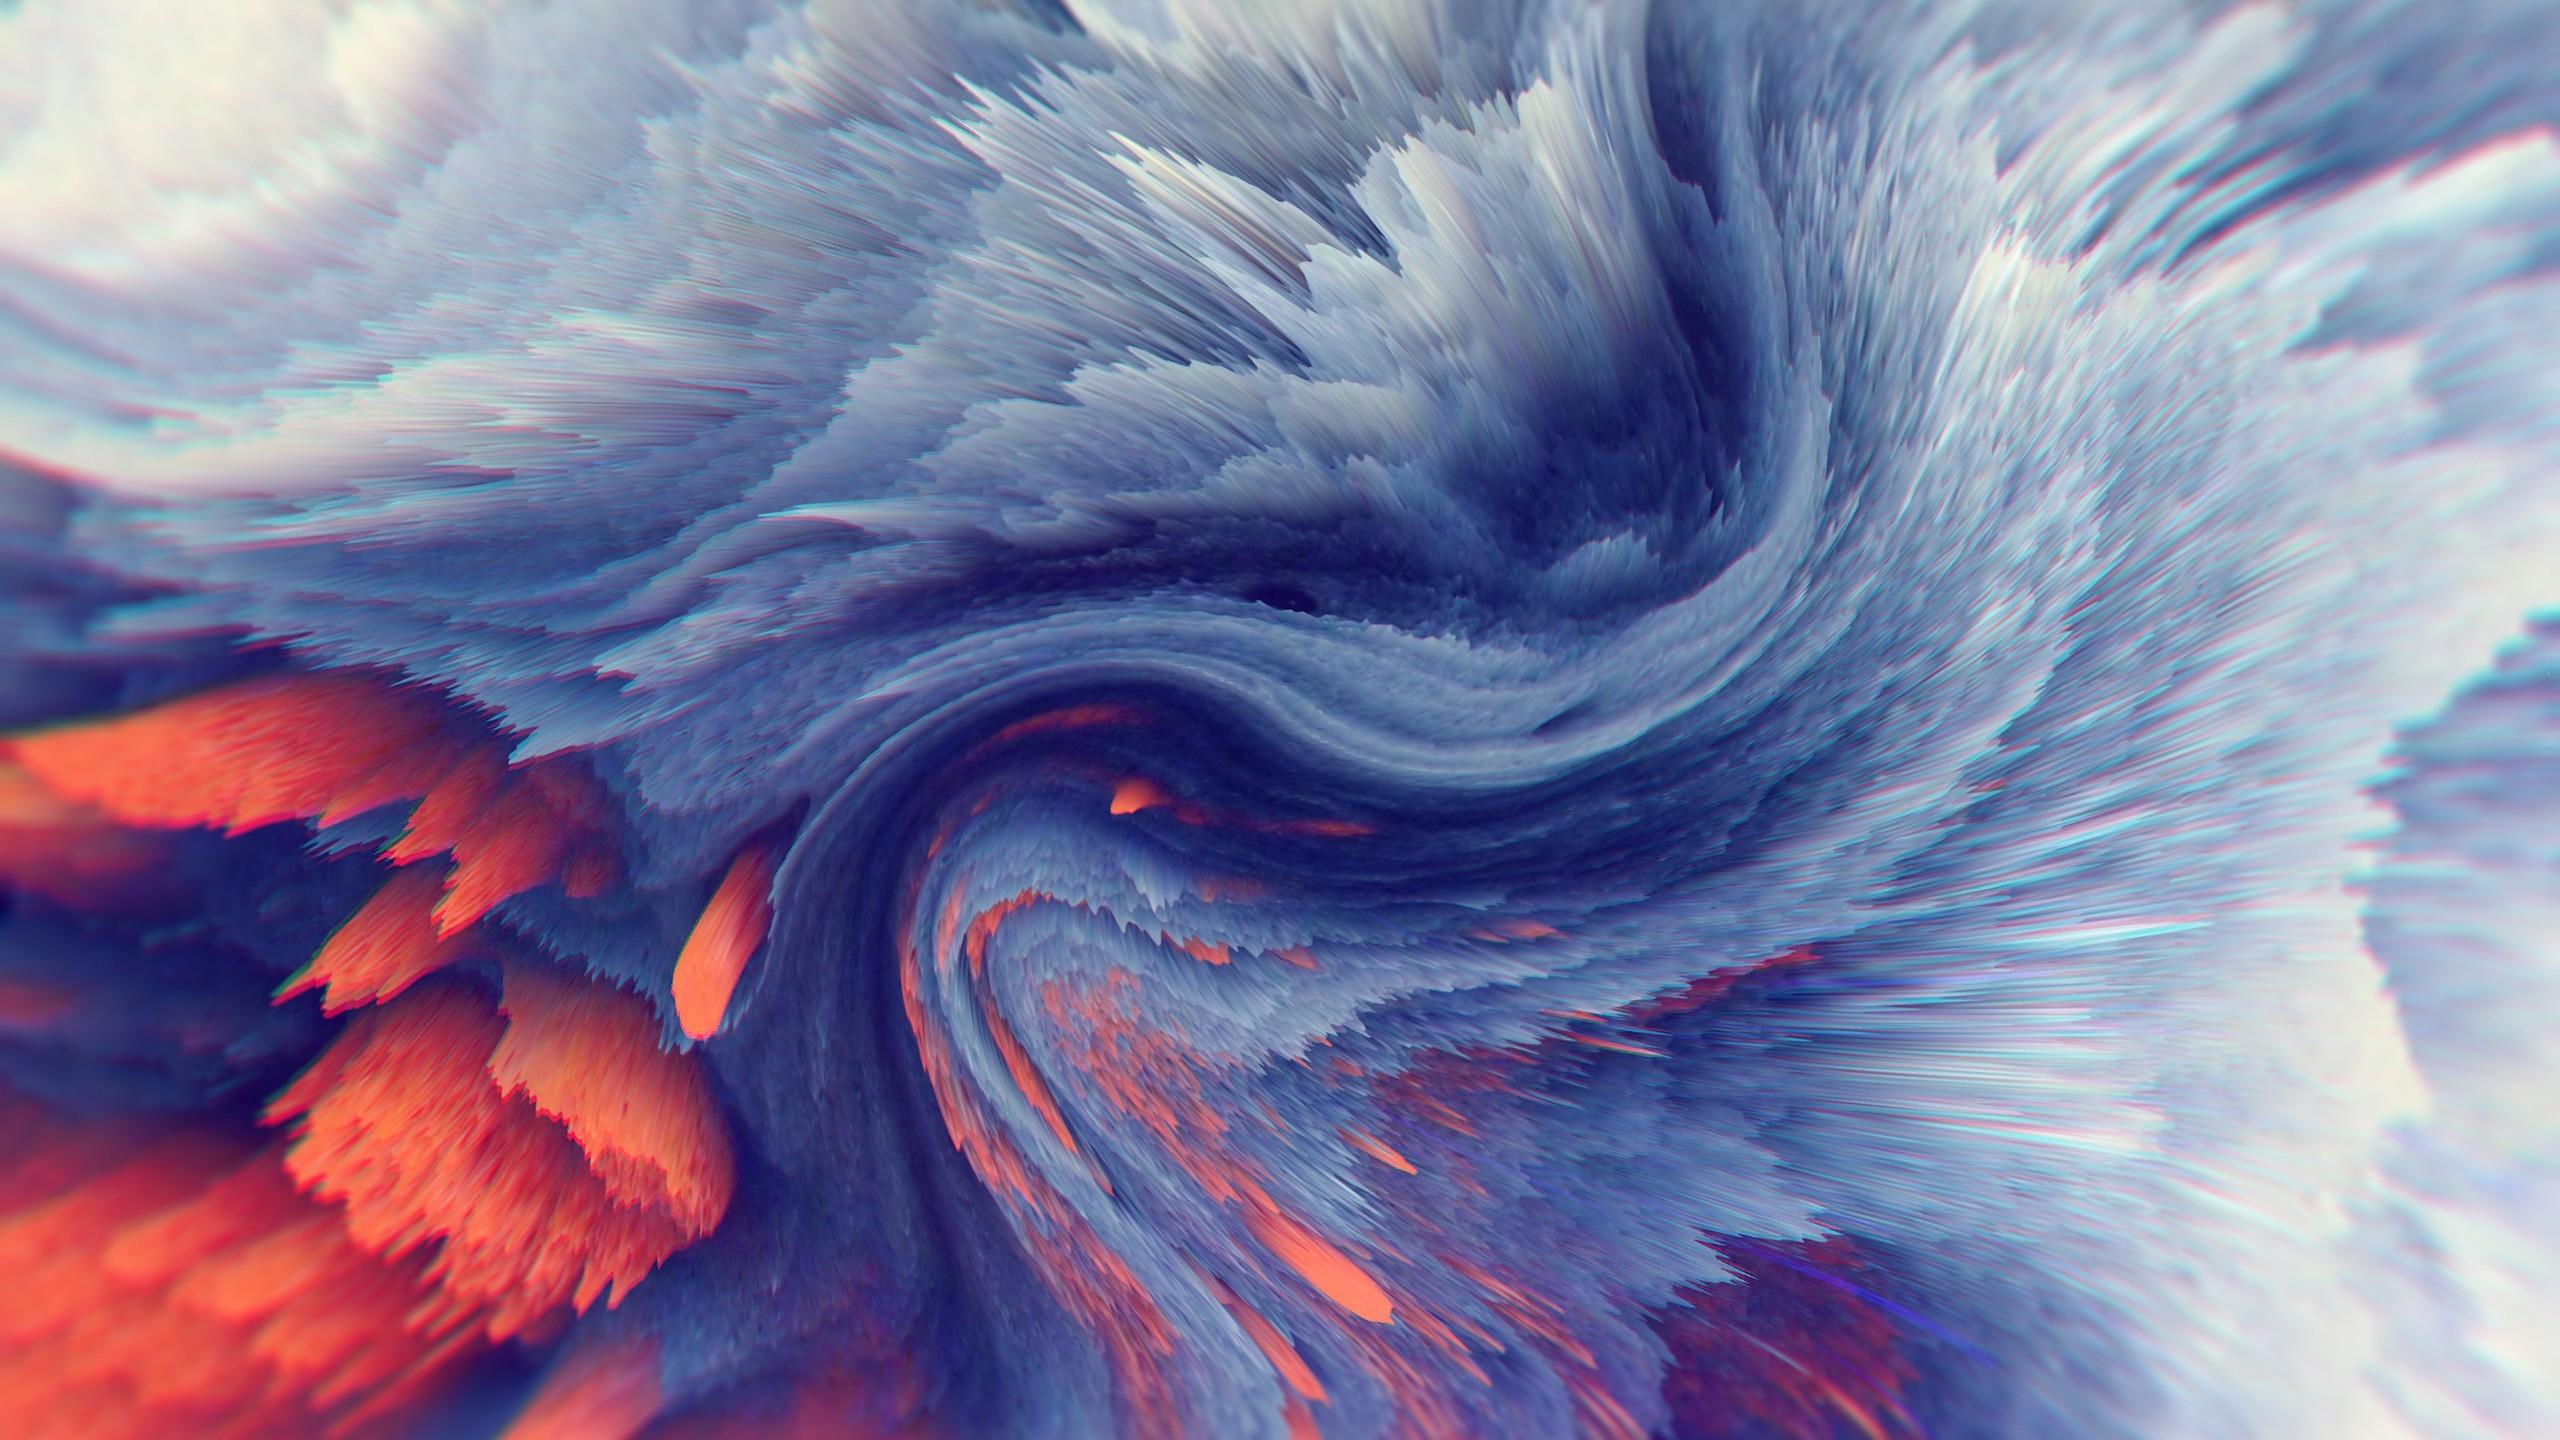 Waves Abstract Colorful, HD Abstract, 4k Wallpaper, Image